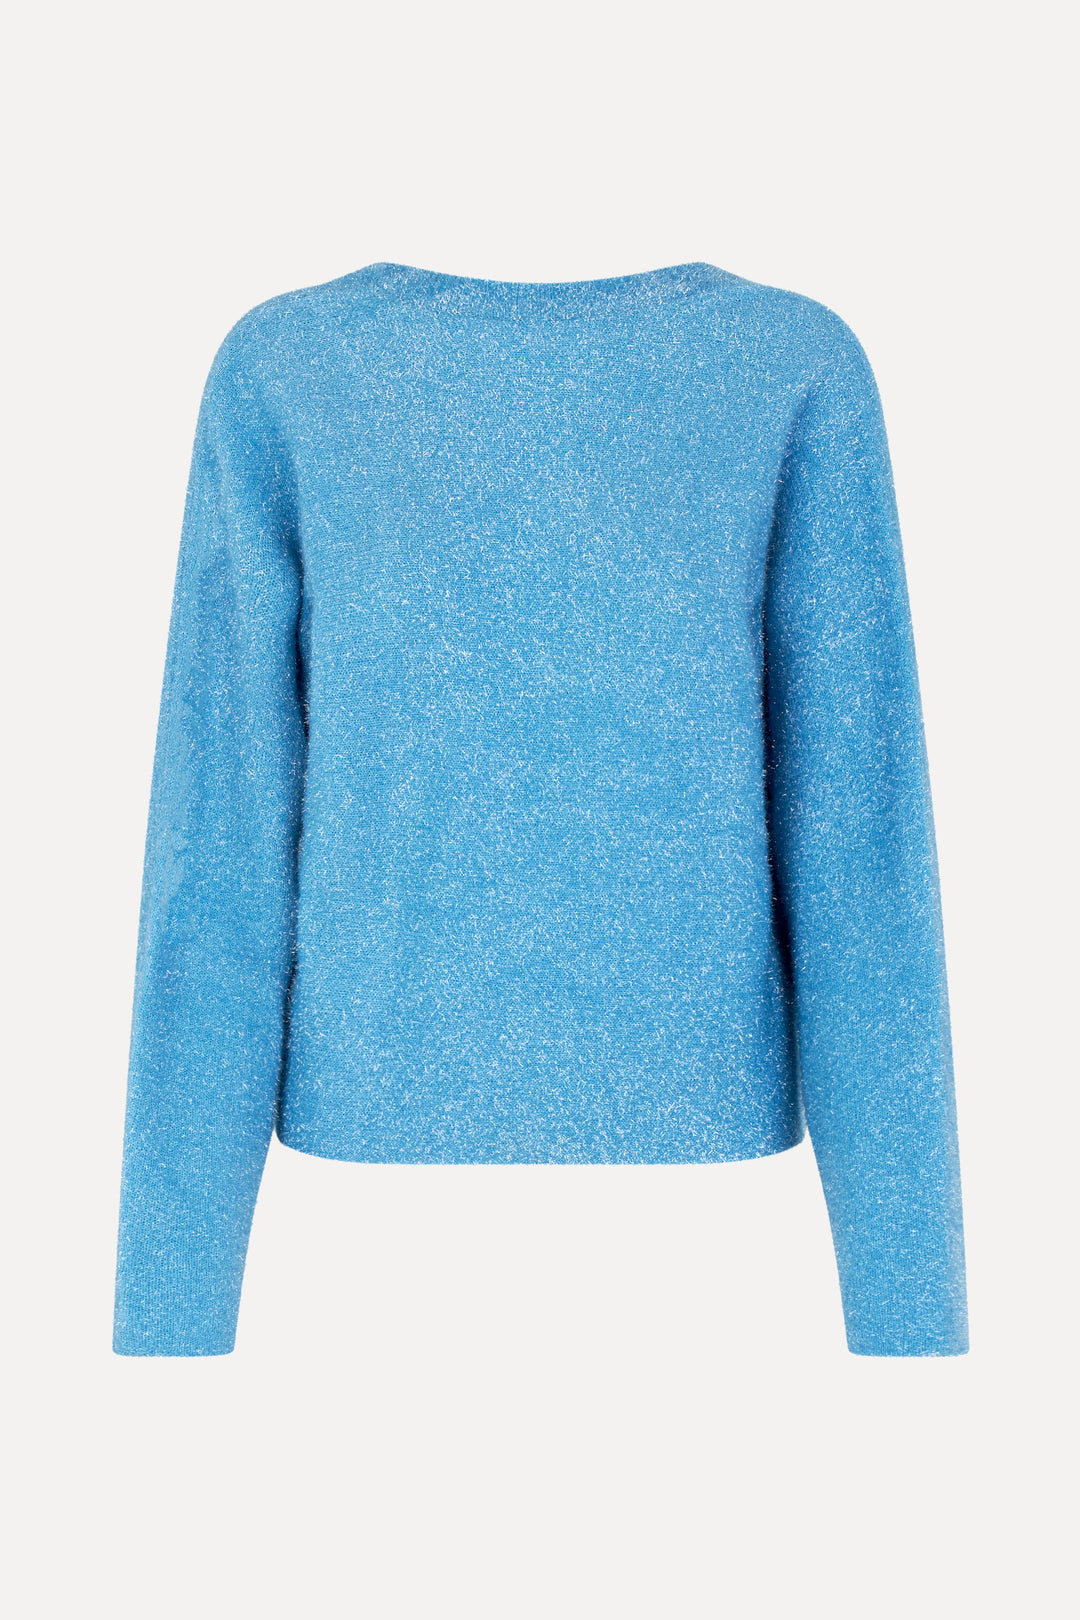 Stine Goya Carina Sweater - Alaskan Blue